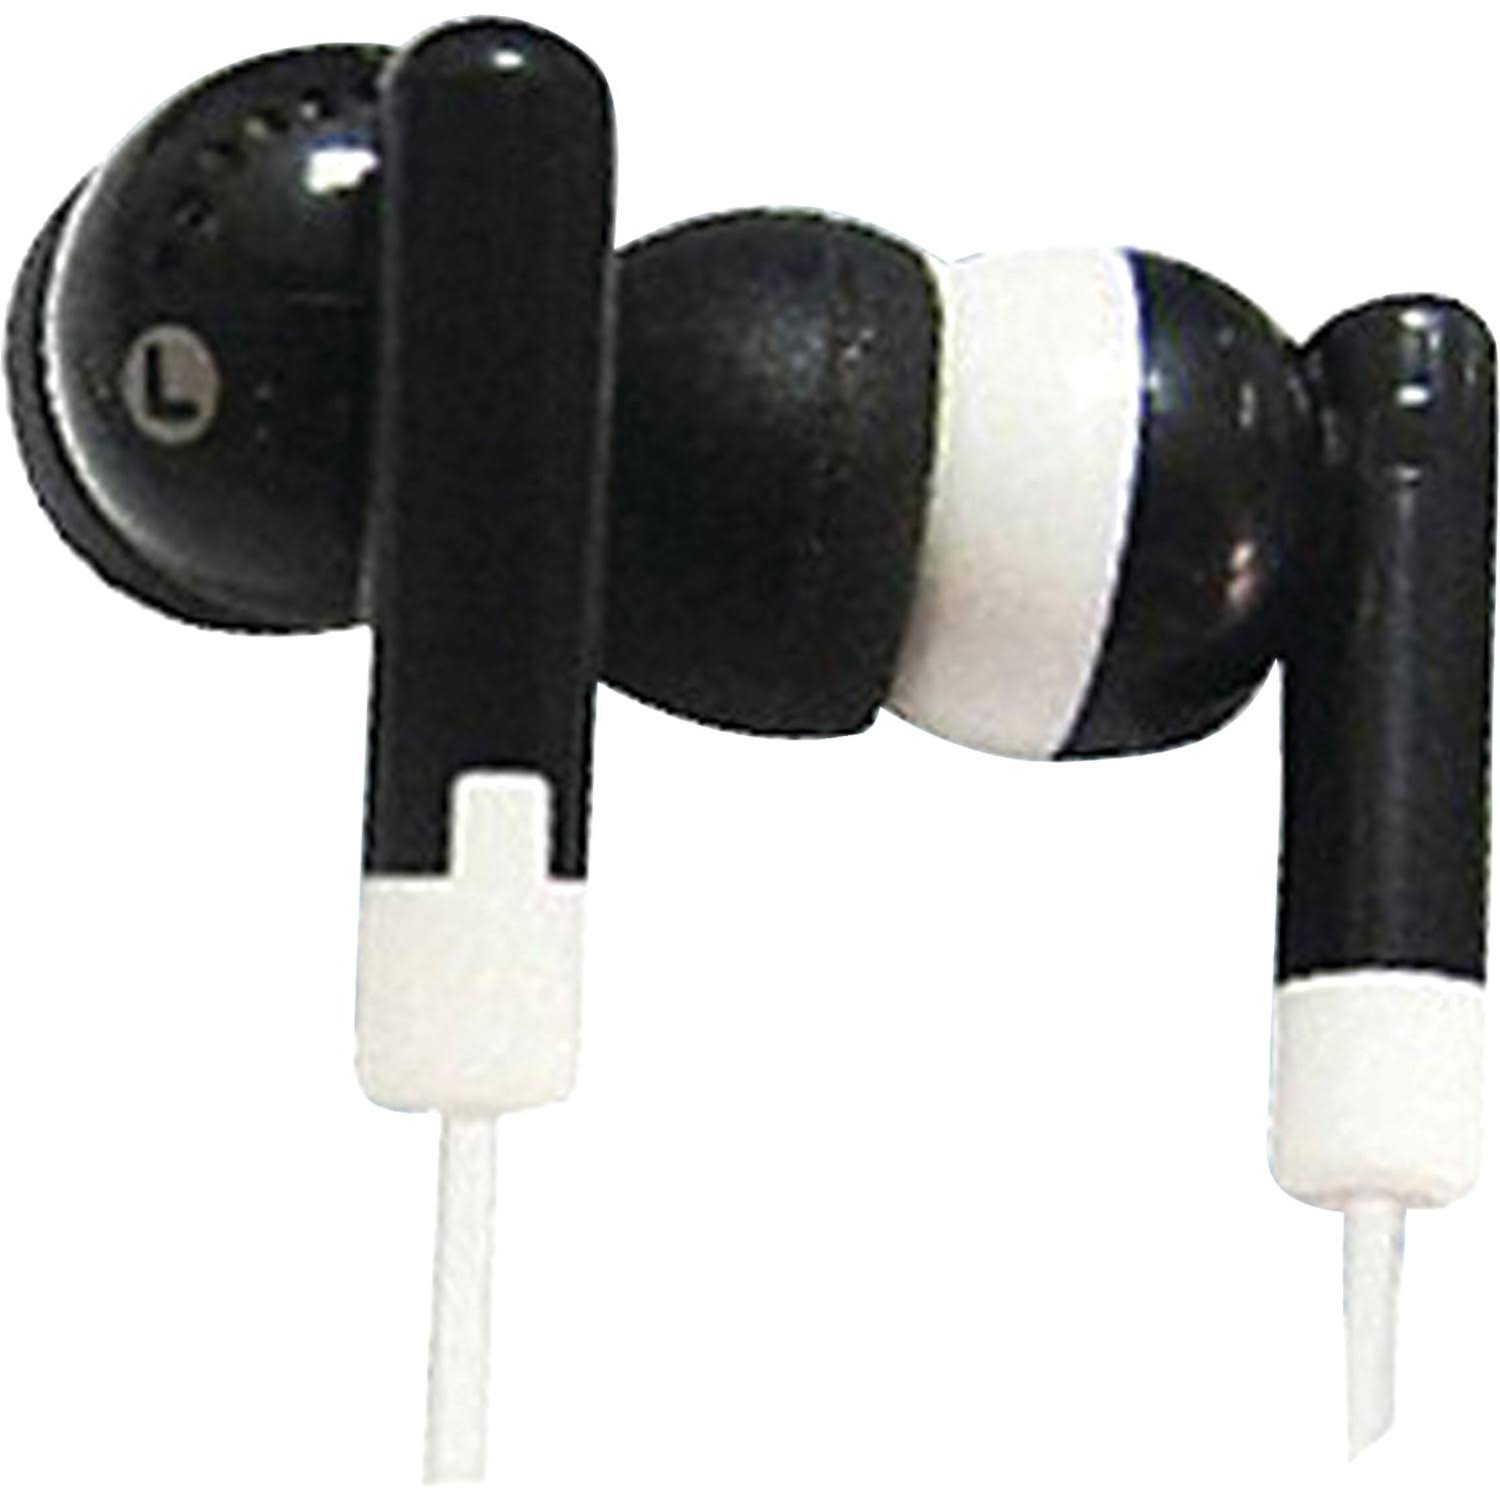 SuperSonic Black IQ-101BLACK Earbud Digital Stereo Earphone